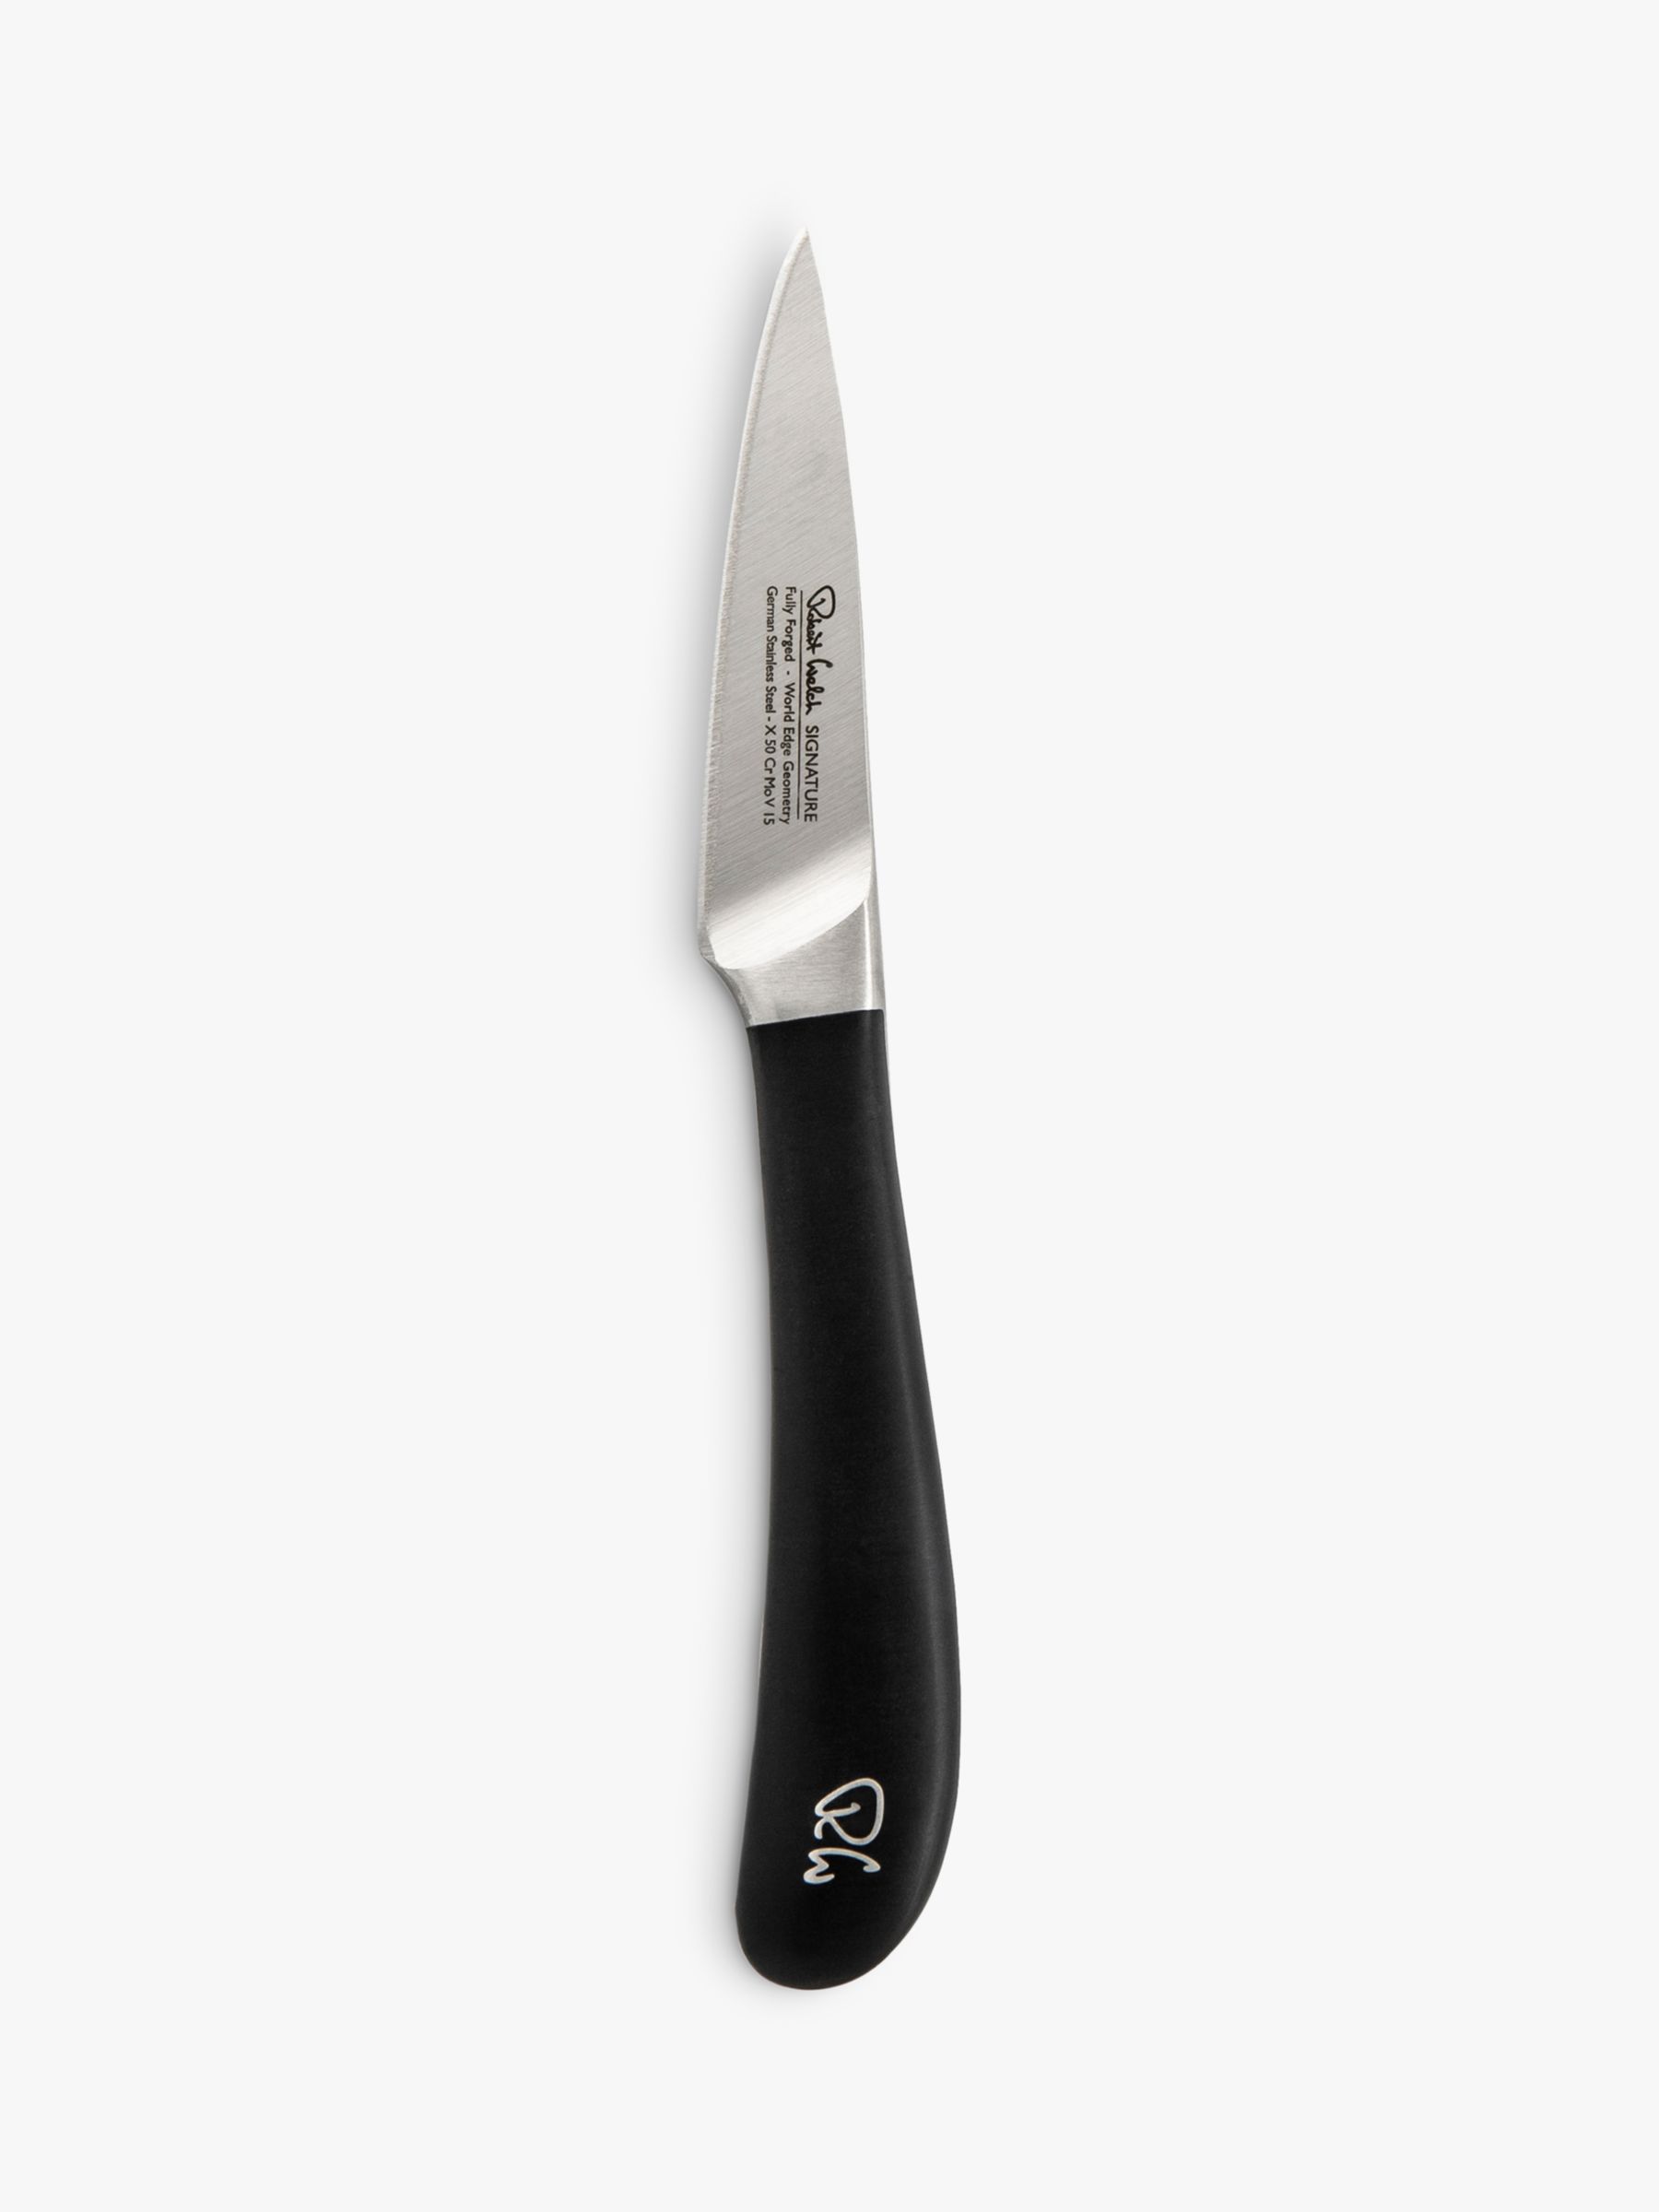 Robert Welch Signature Vegetable Knife, 8cm